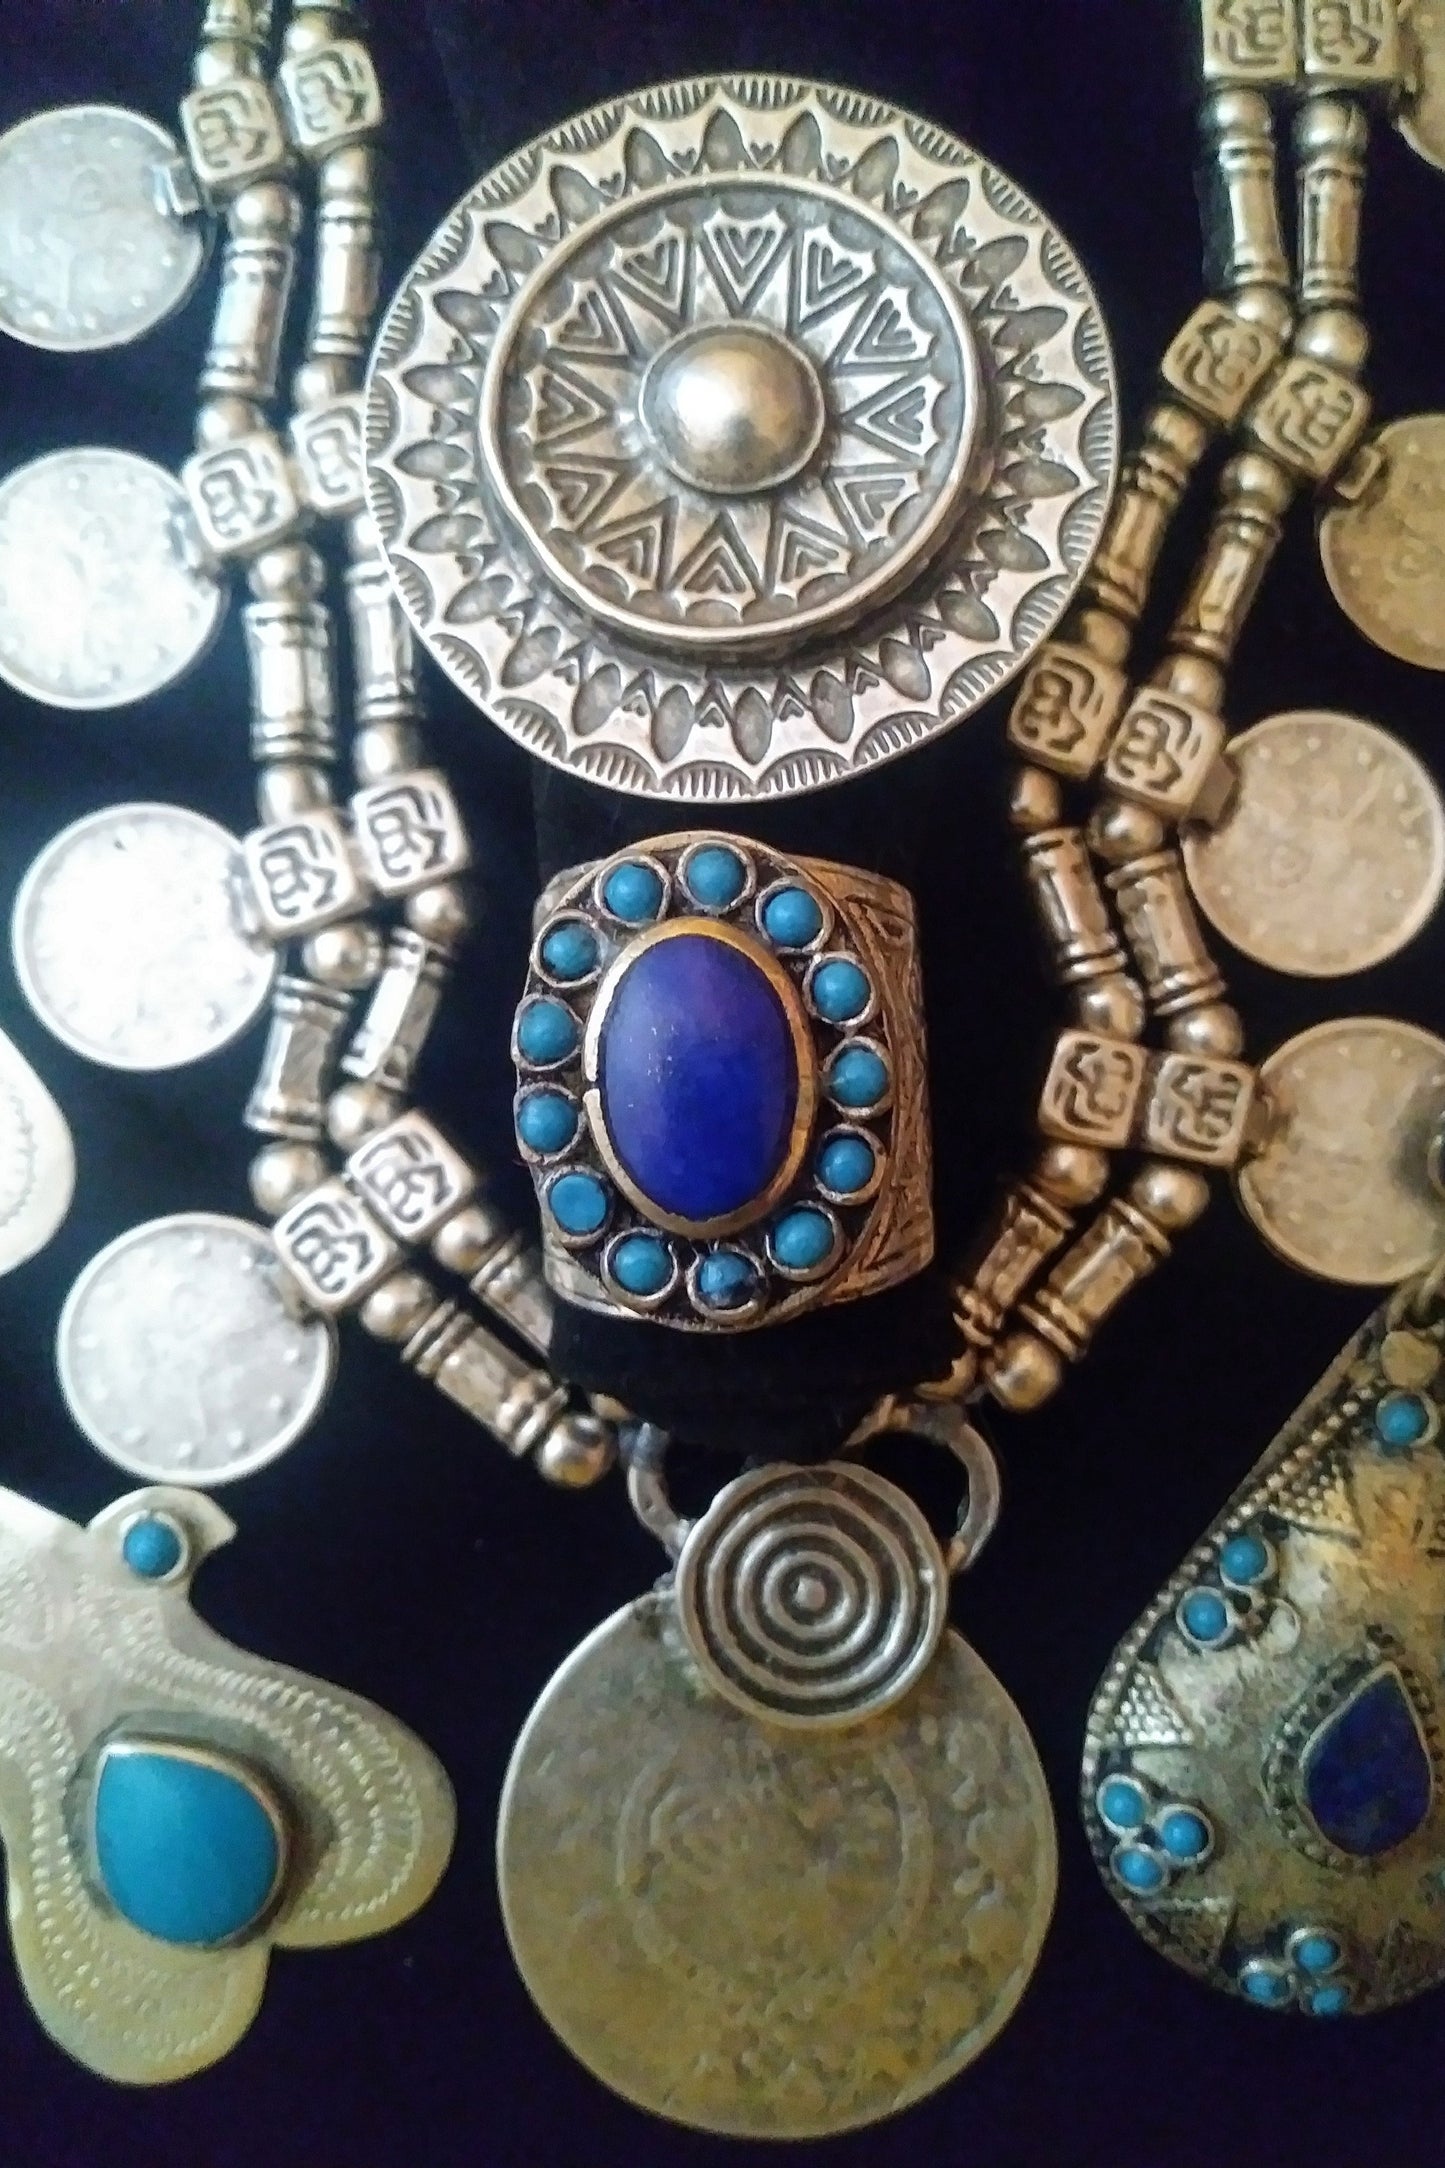  Bohemian Gypsy Tribal Jewelry! Come see  at Bohemian Dreamin.com